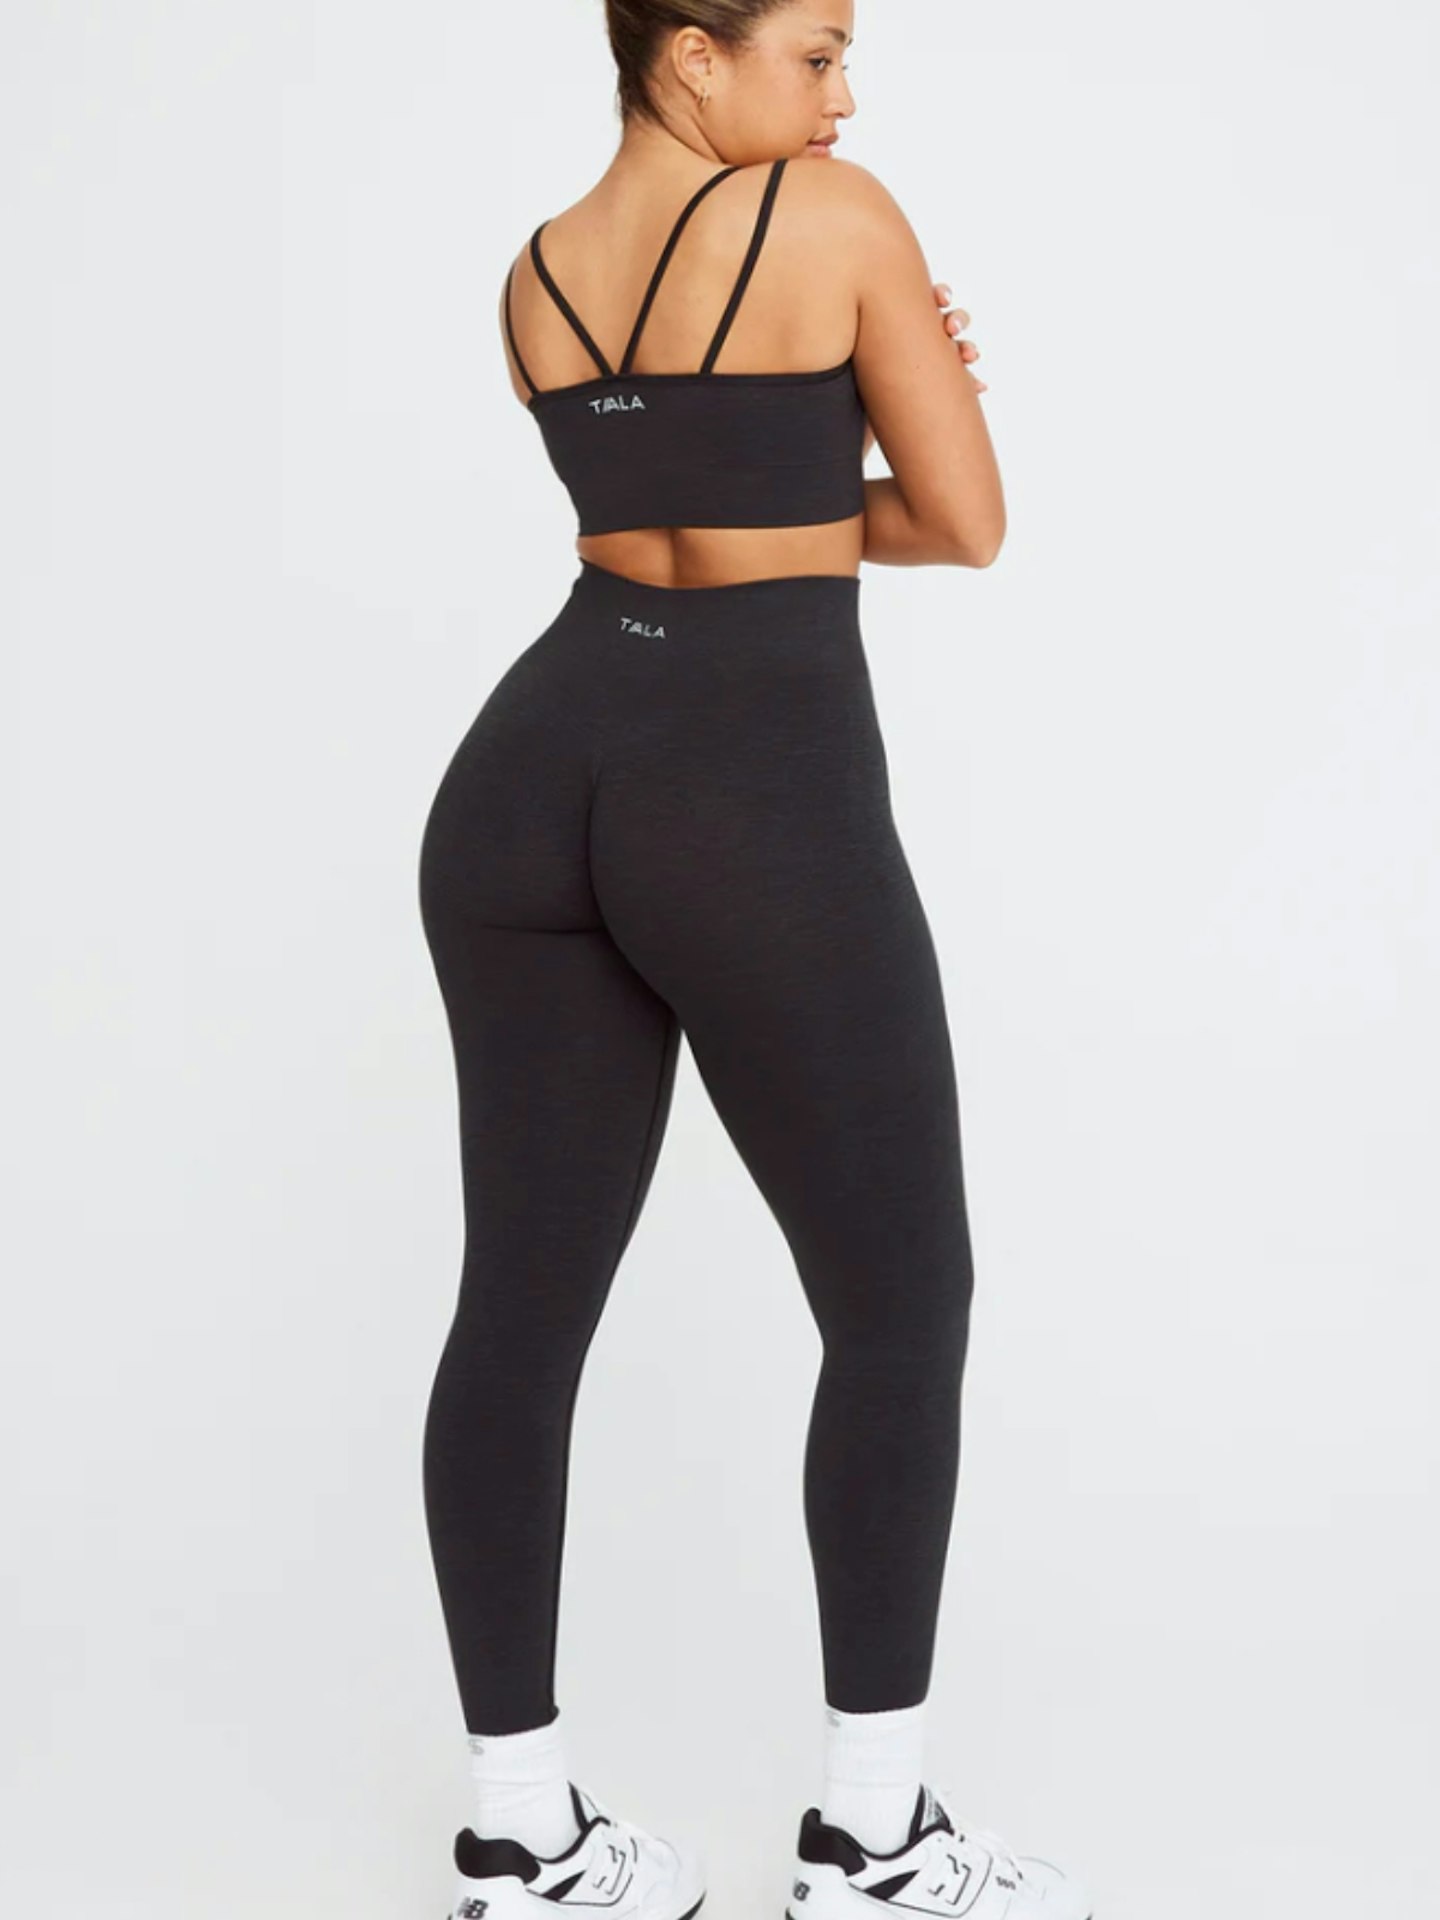 DOULAFASS Women Contour Seamless Butt Lifting Leggings Scrunch Bums Yoga  Pants High Waisted Sports Workout Gym Leggings : : Fashion